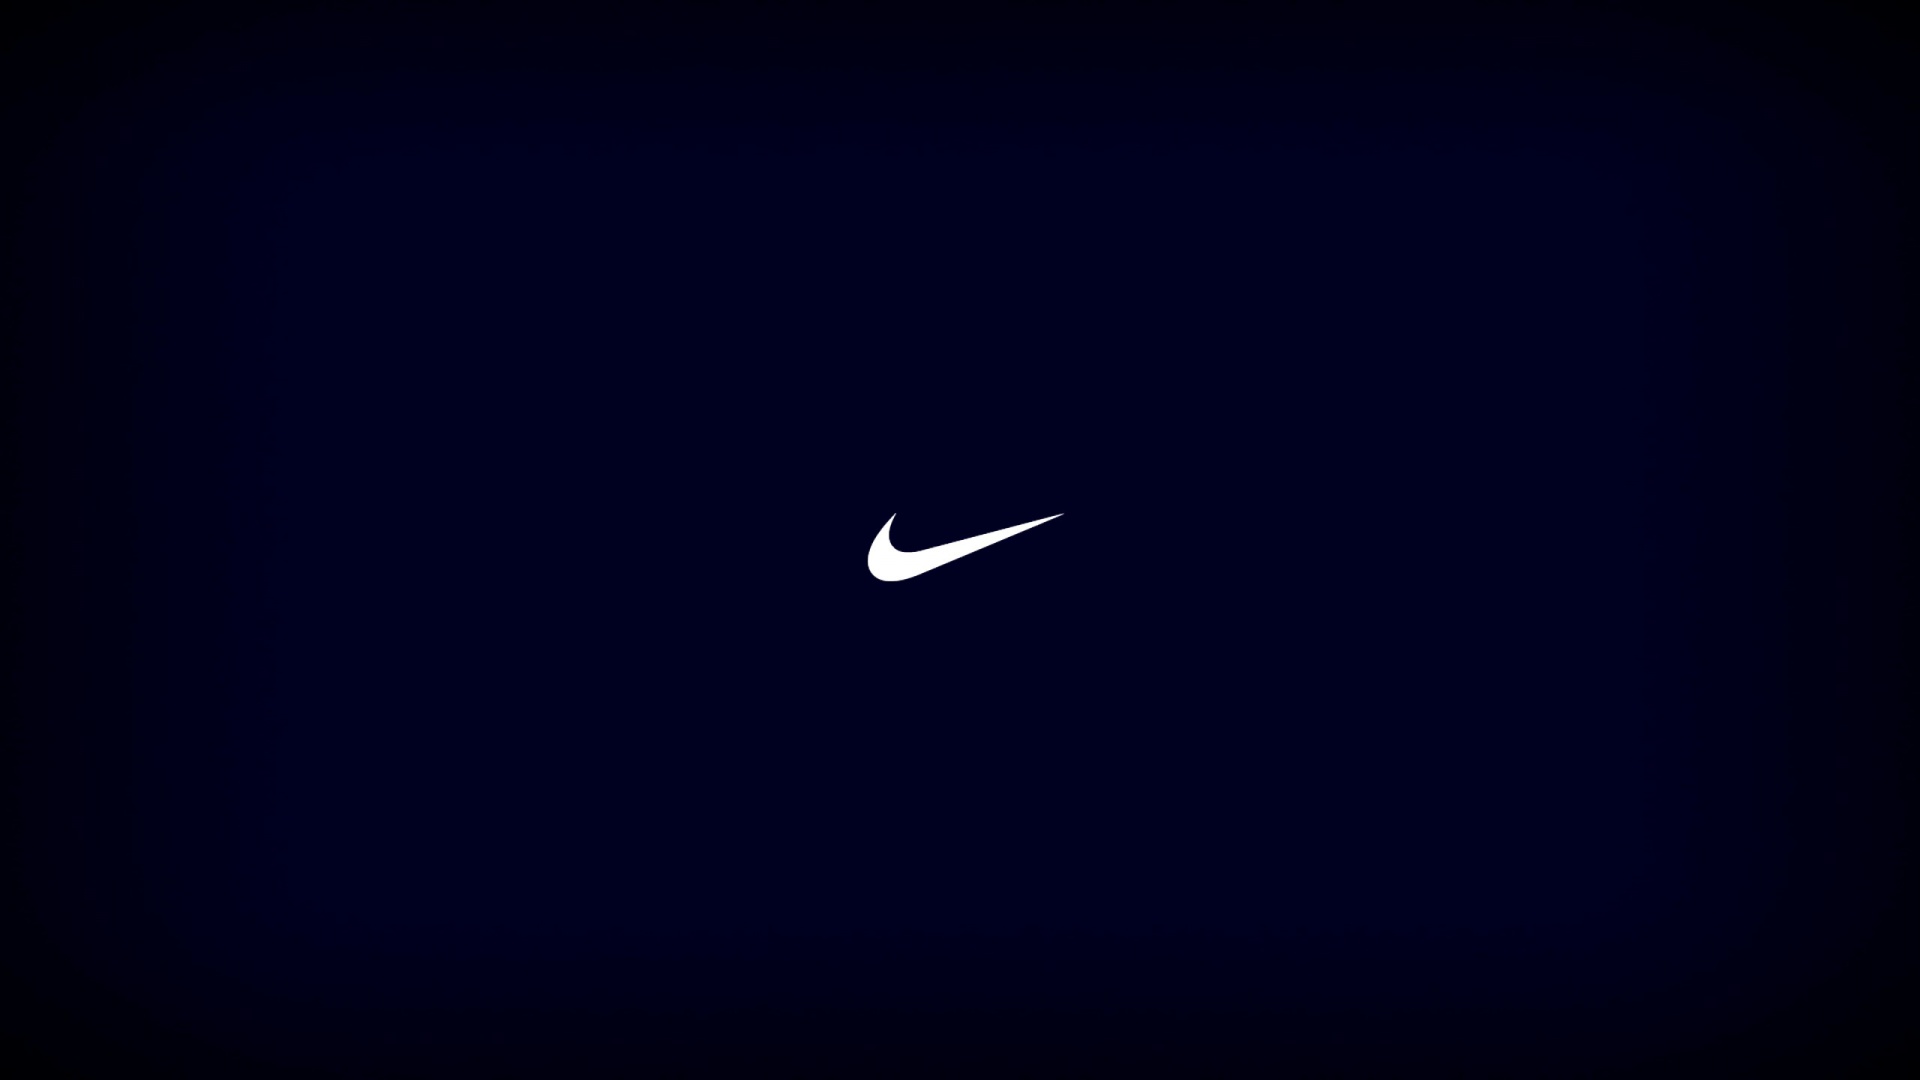 Nike Logo On The Blue Background Wallpaper Des High